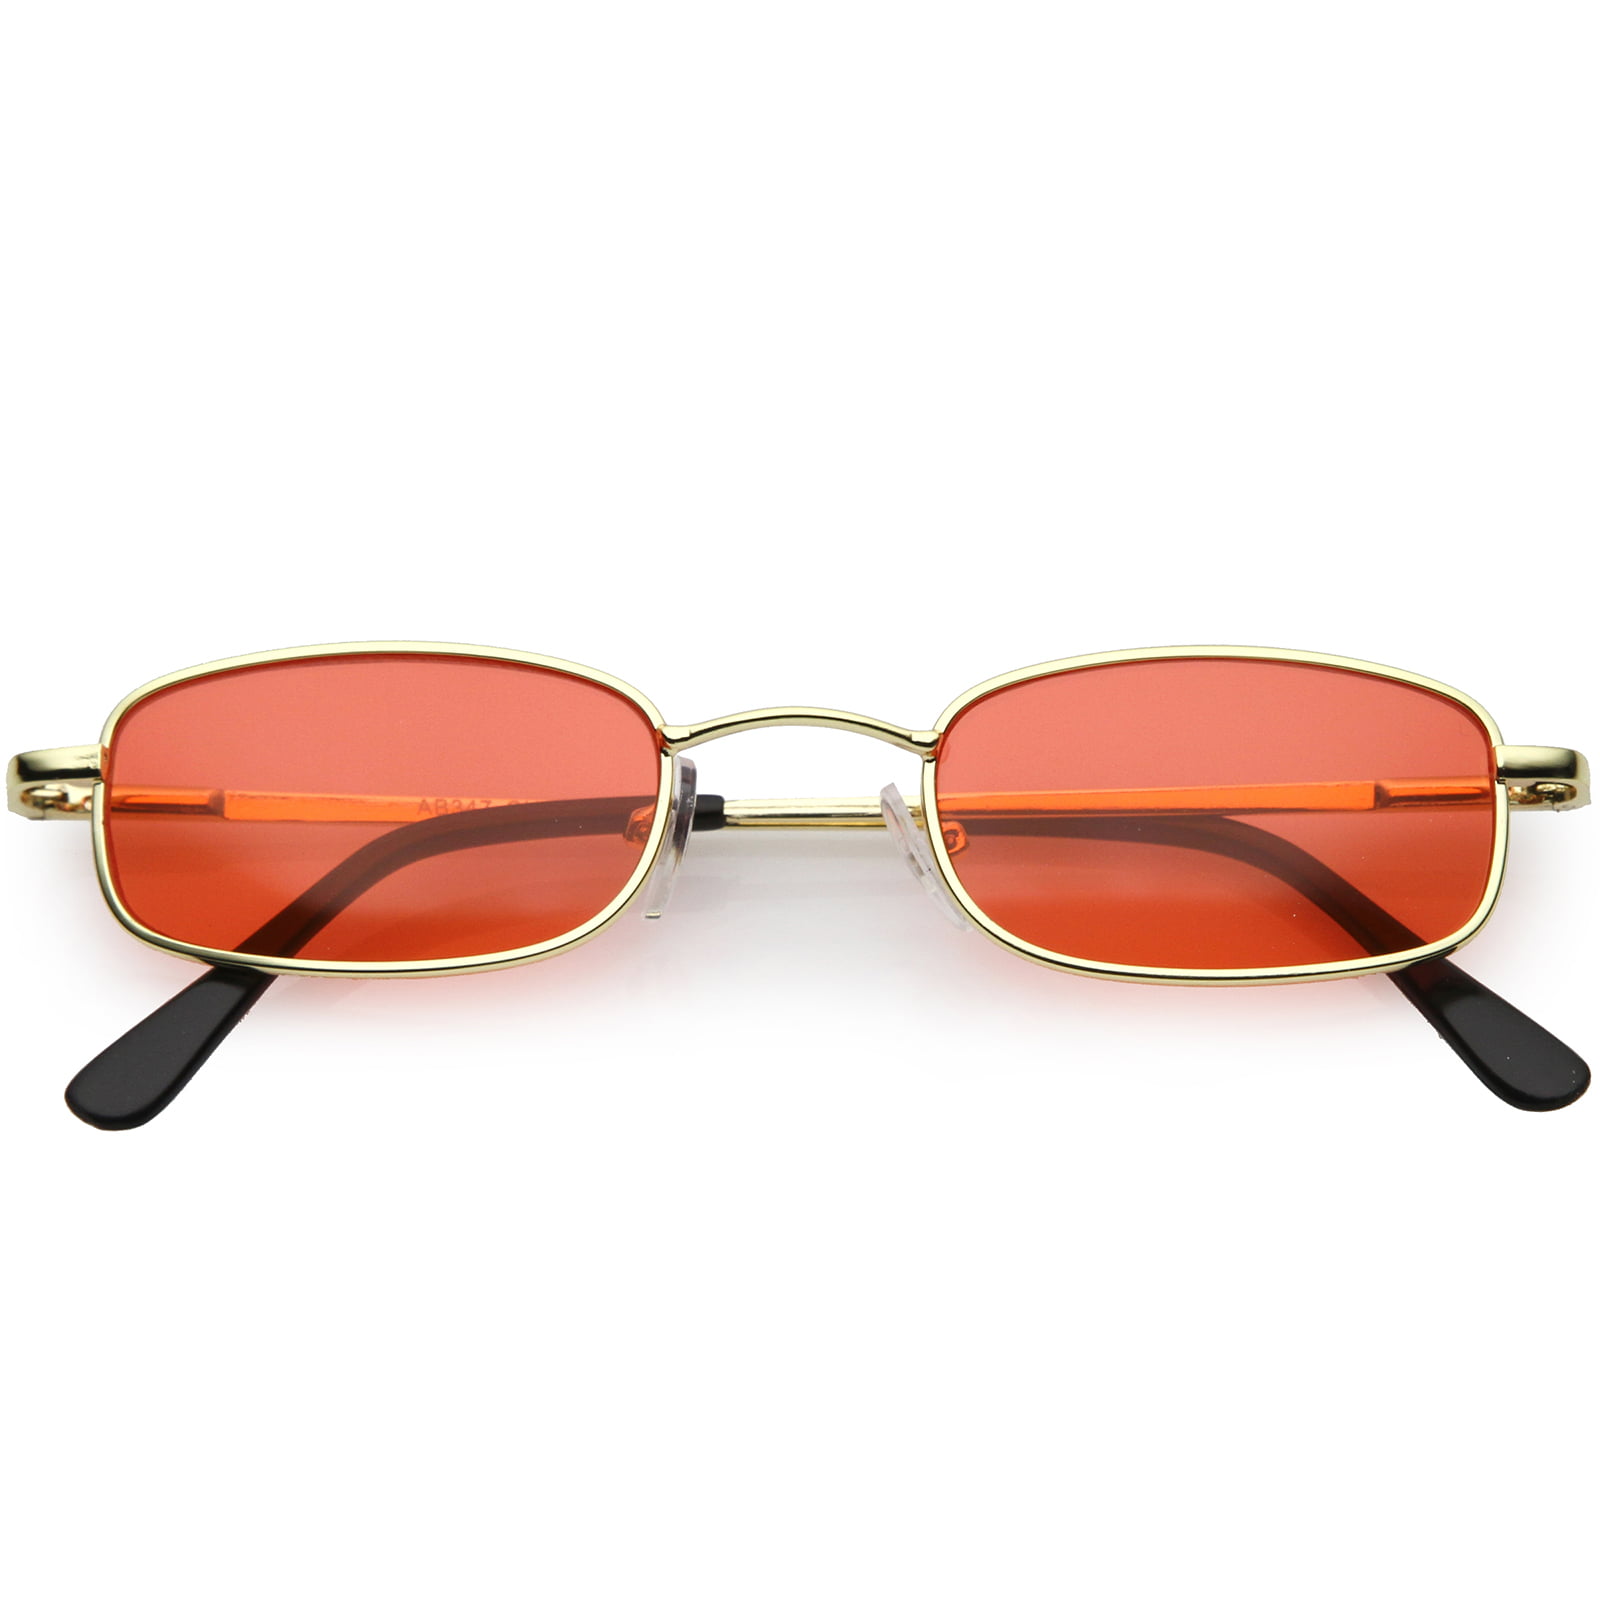 5 angled subtle hexagon lenses with gunmetal trim and arms and vivid amber lenses Y2K vintage frameless orange sunglasses 2000s NOS